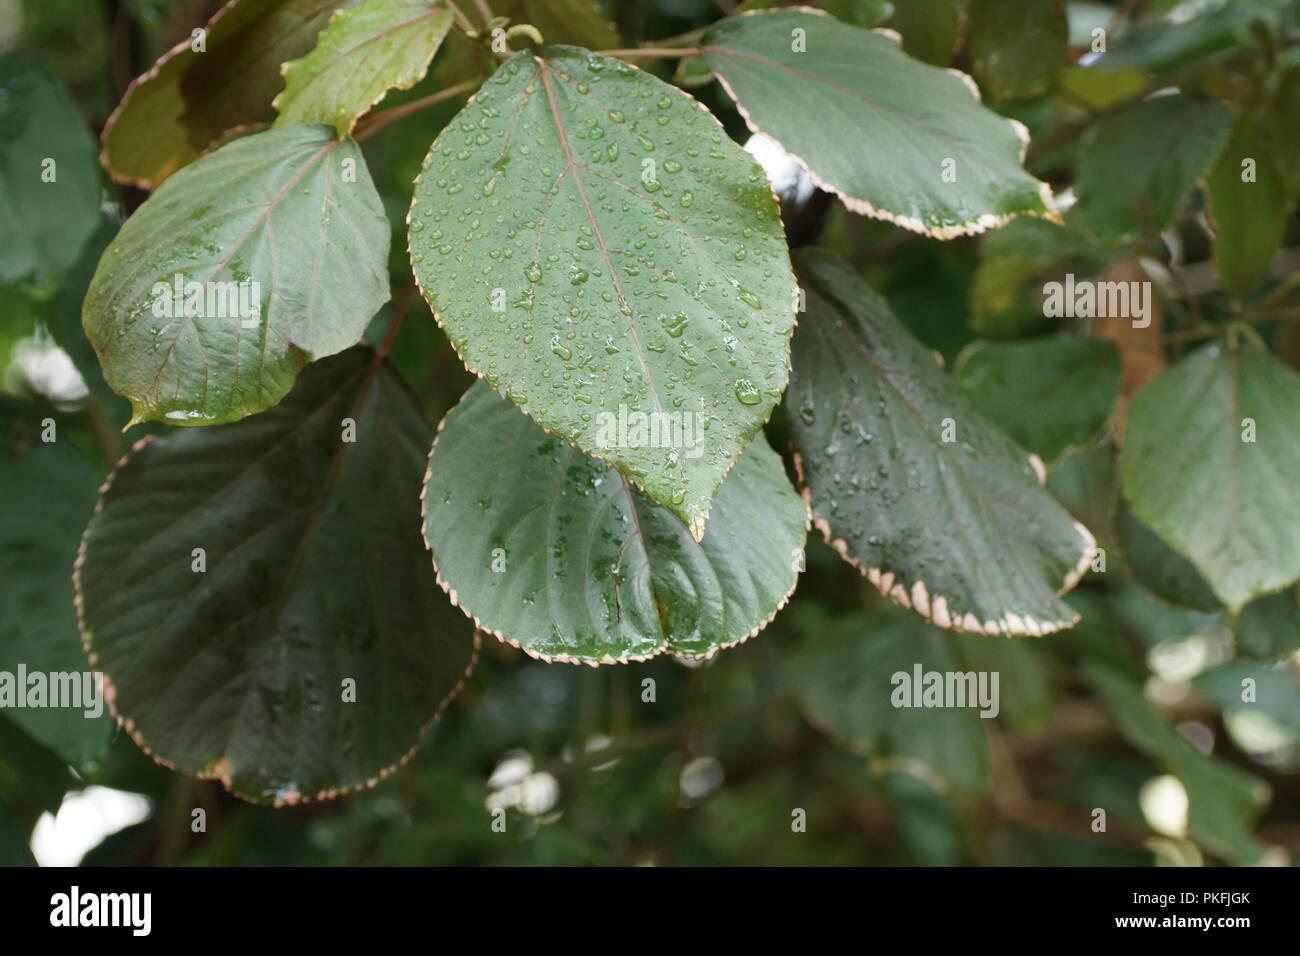 Acalypha wilkesiana var. marginata Stock Photo